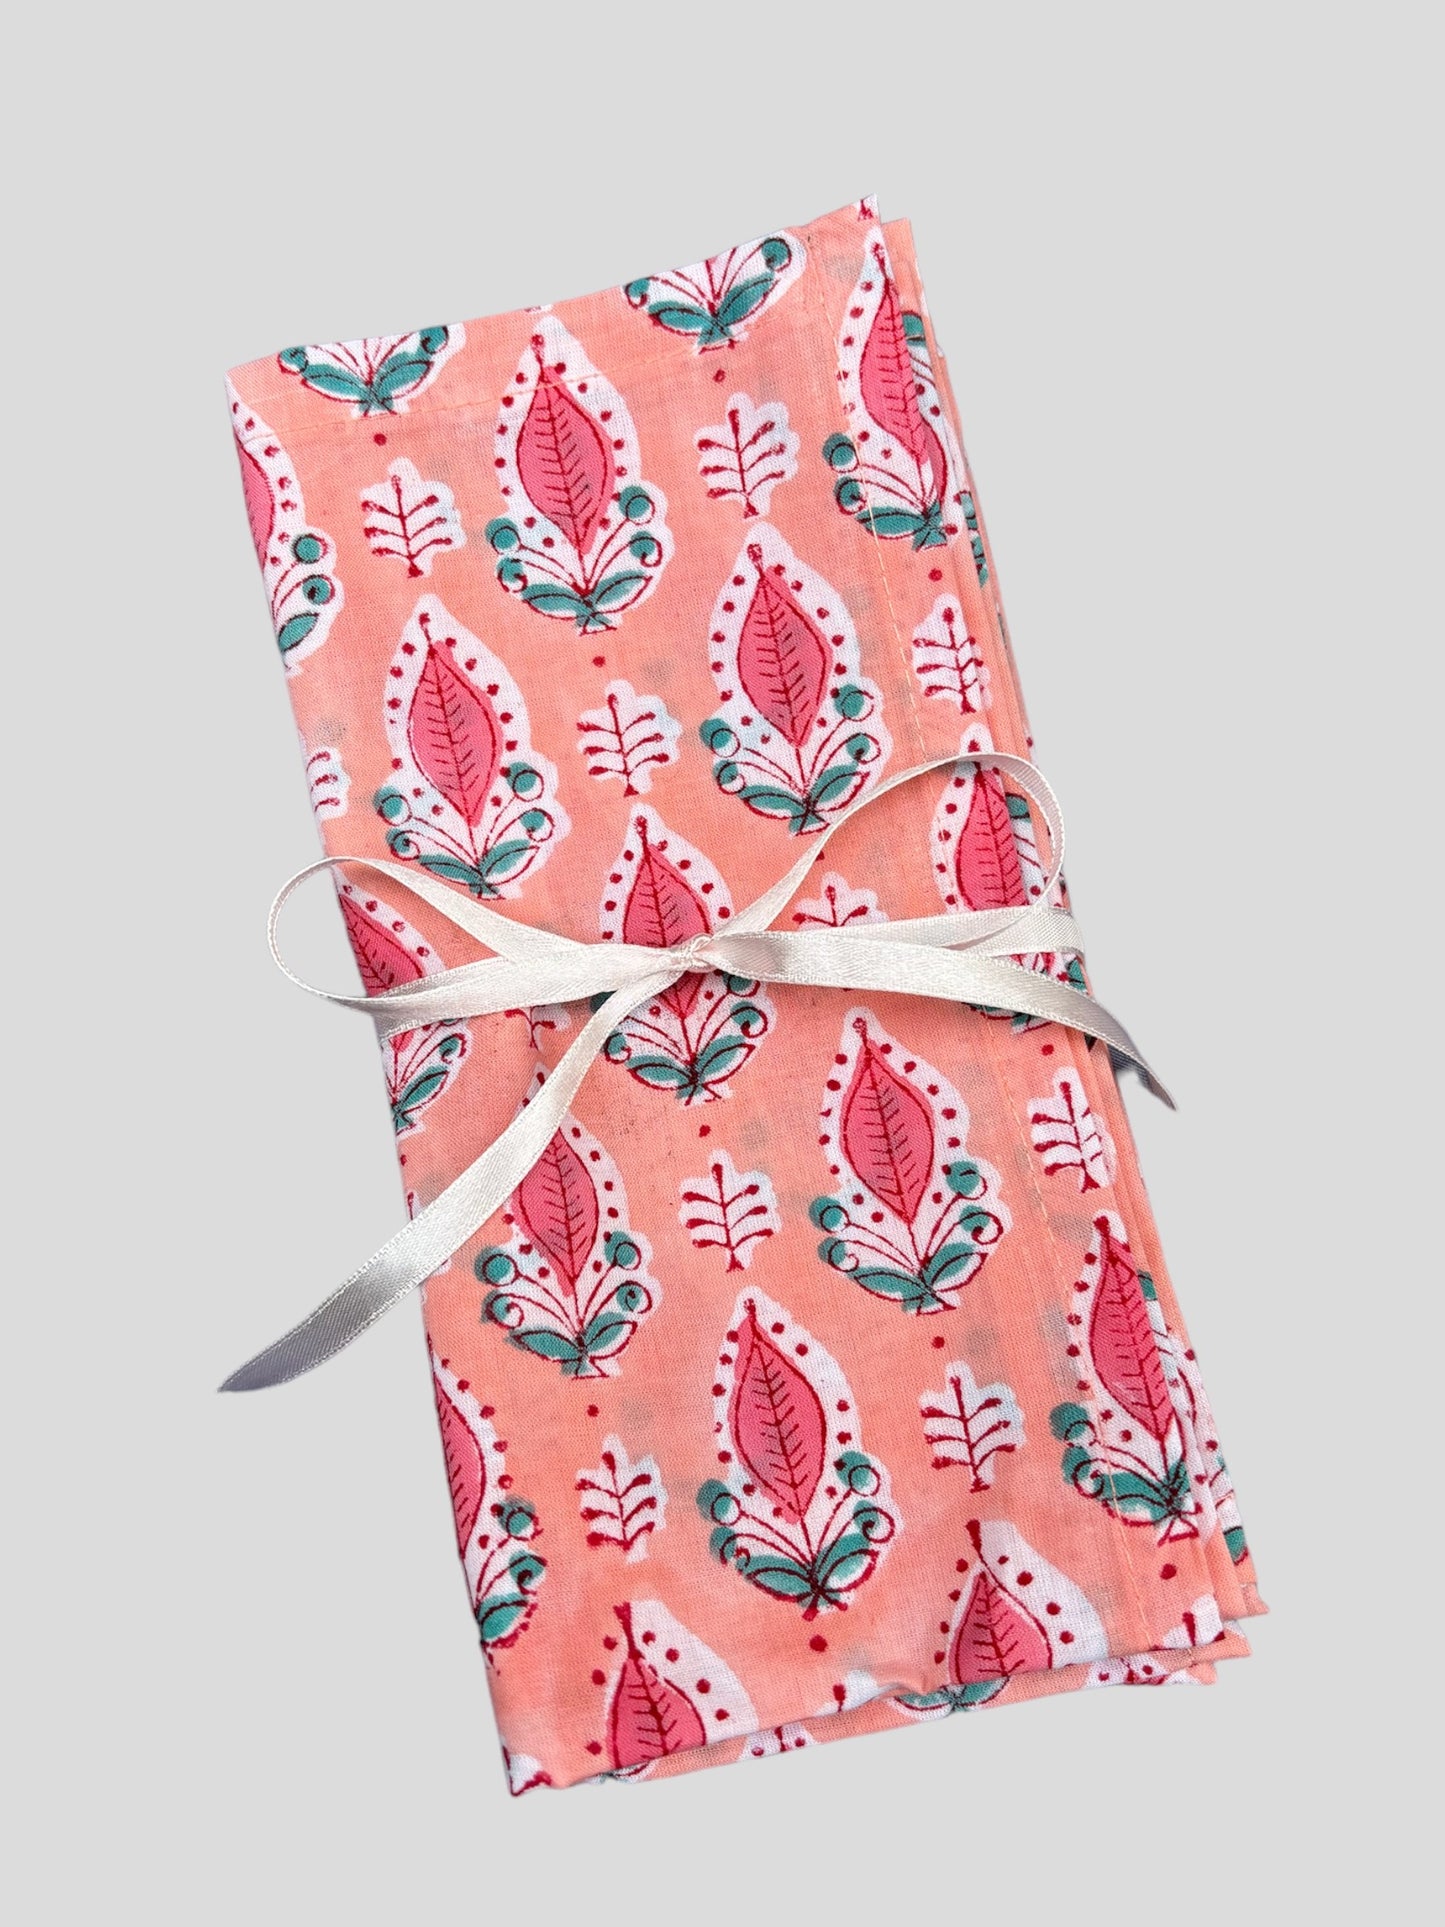 Pink floral blockprinted napkins tied in ribbon.